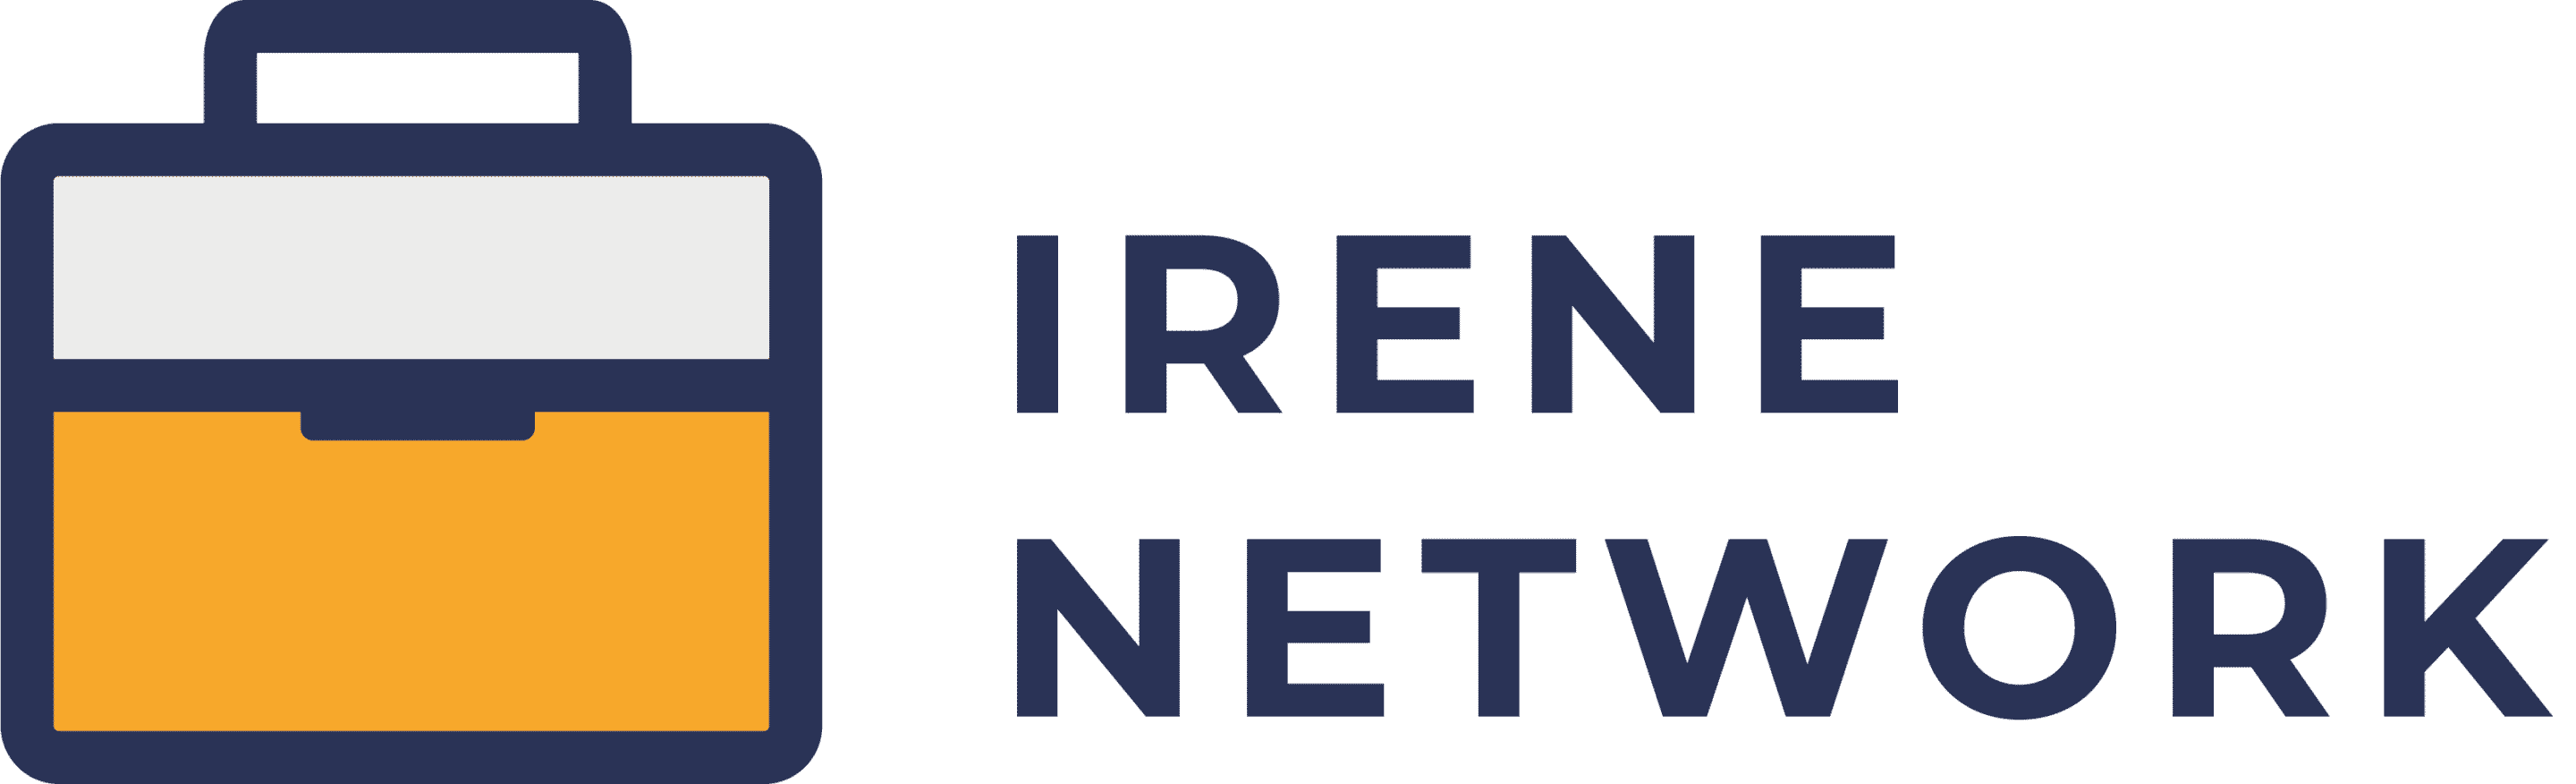 Irene Network